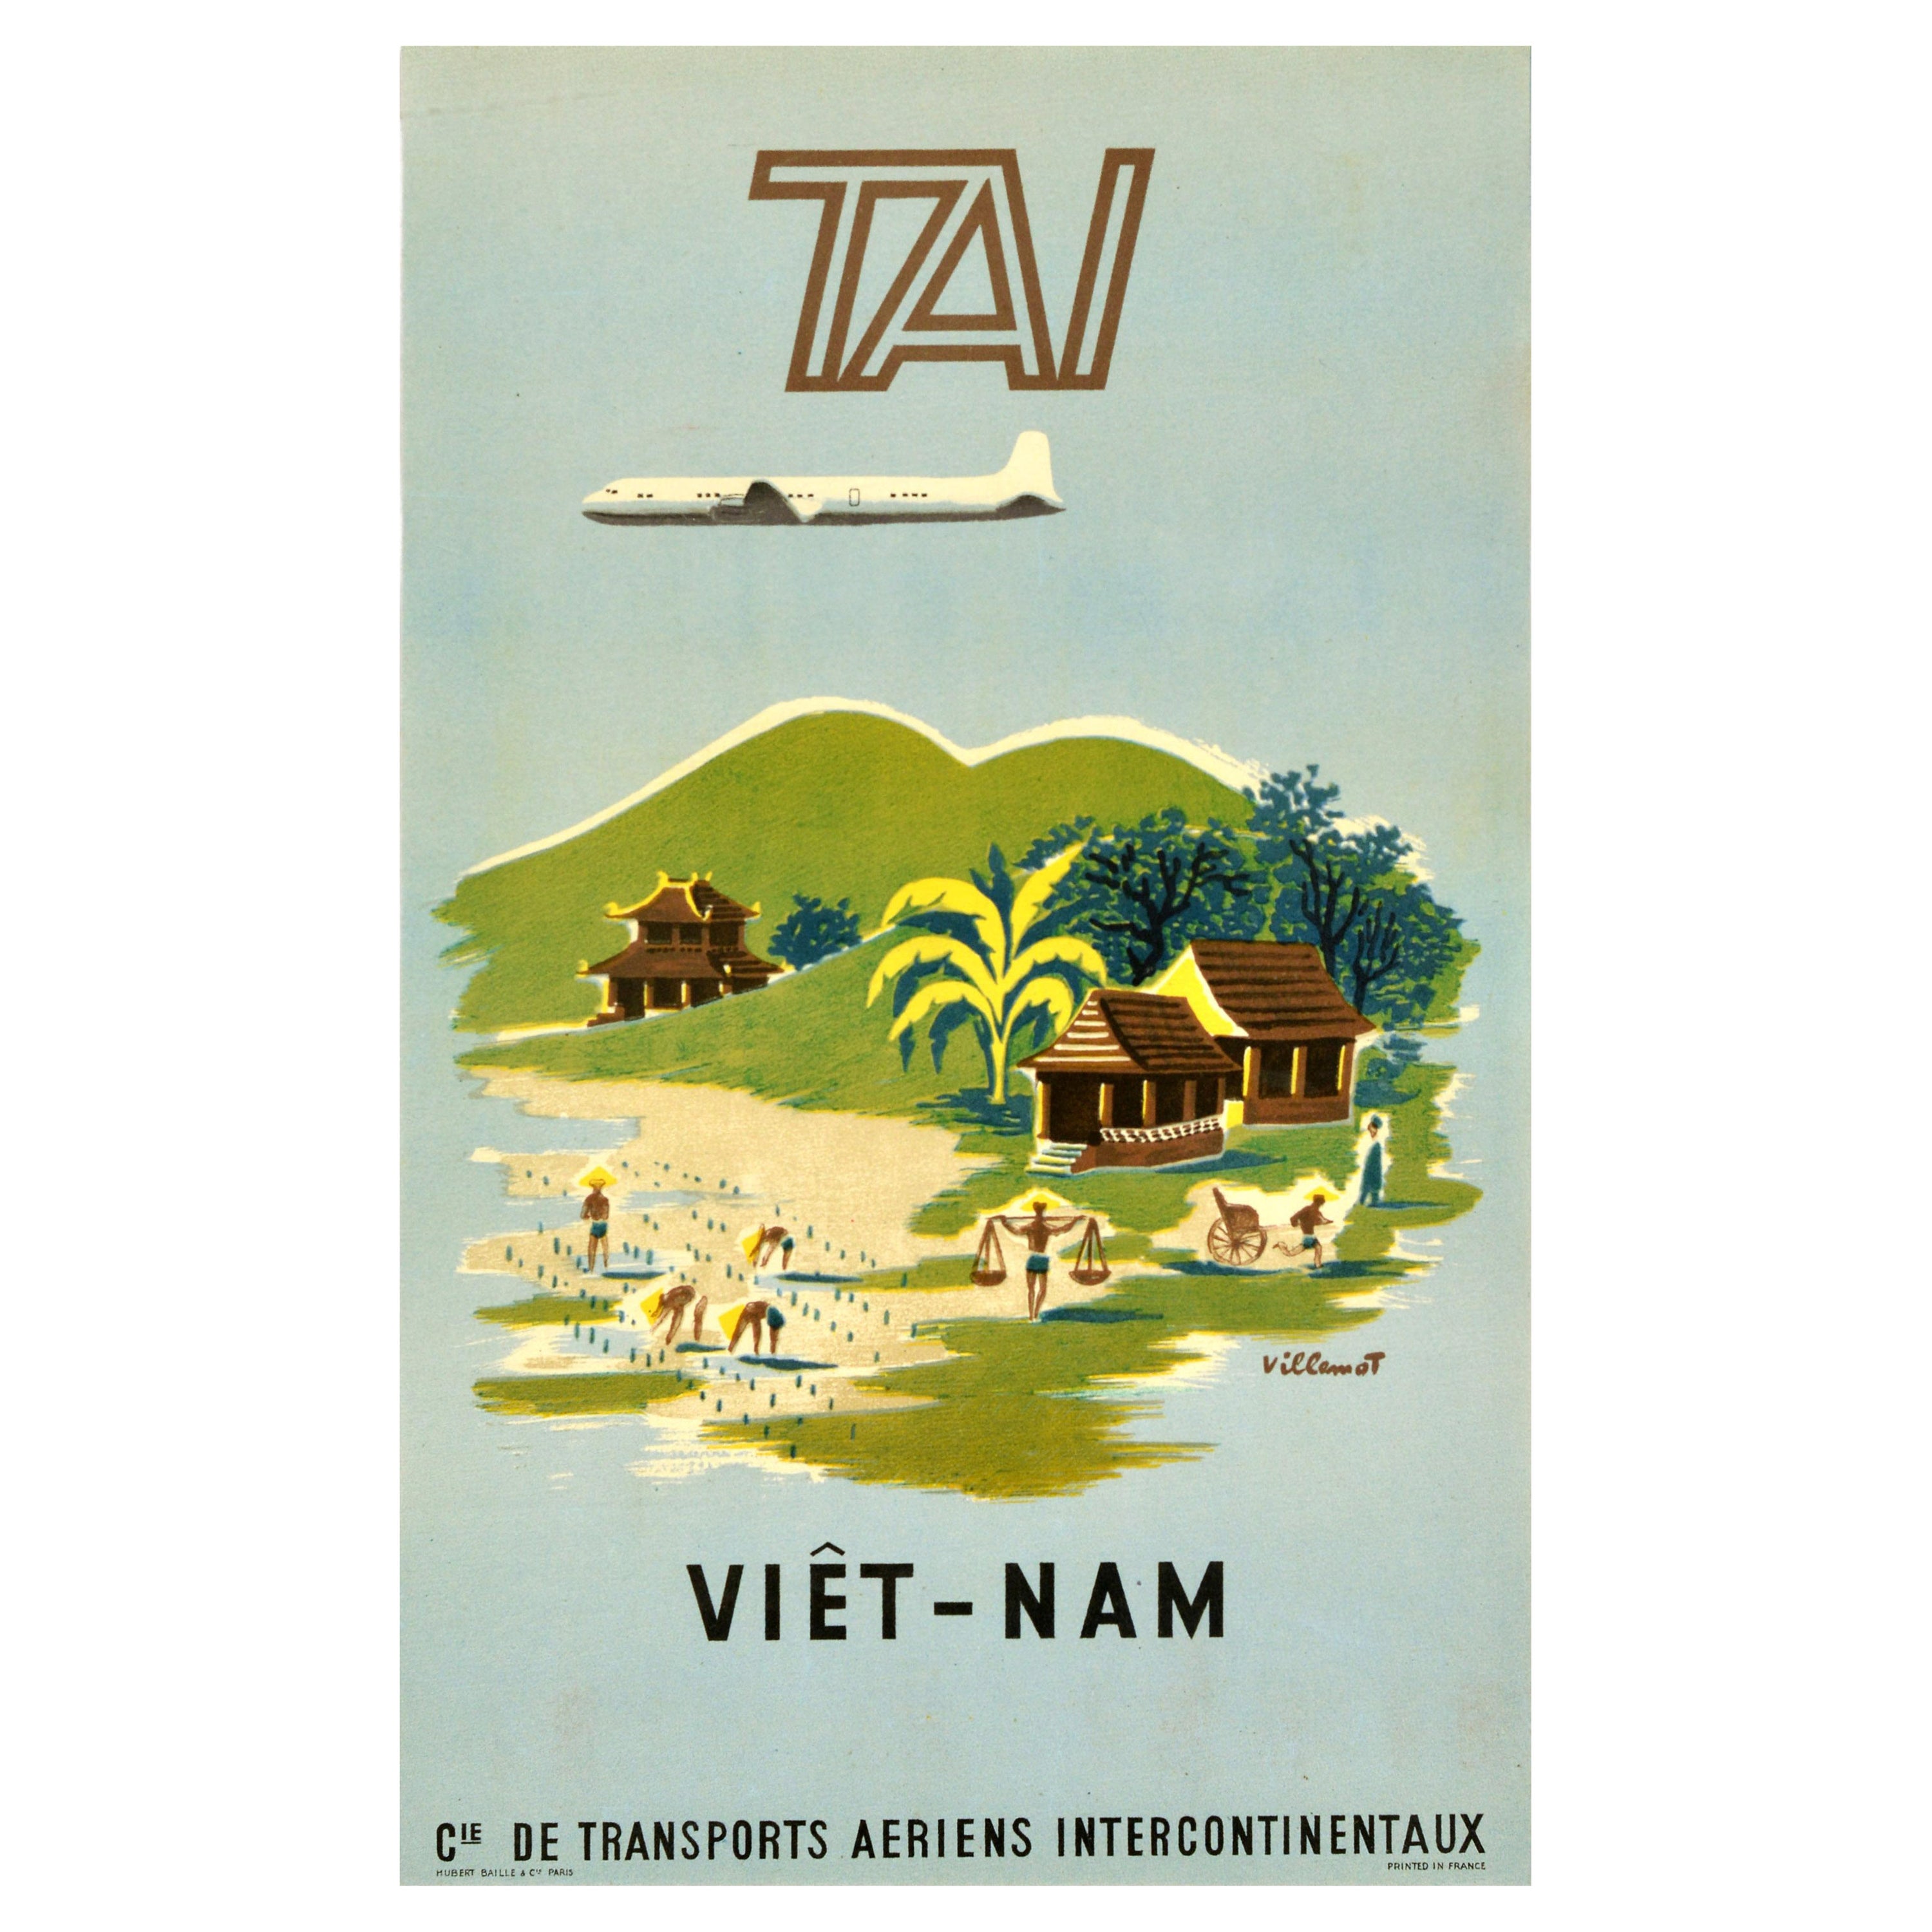 Original Vintage Travel Poster TAI Airline Vietnam Asia Villemot Midcentury Art